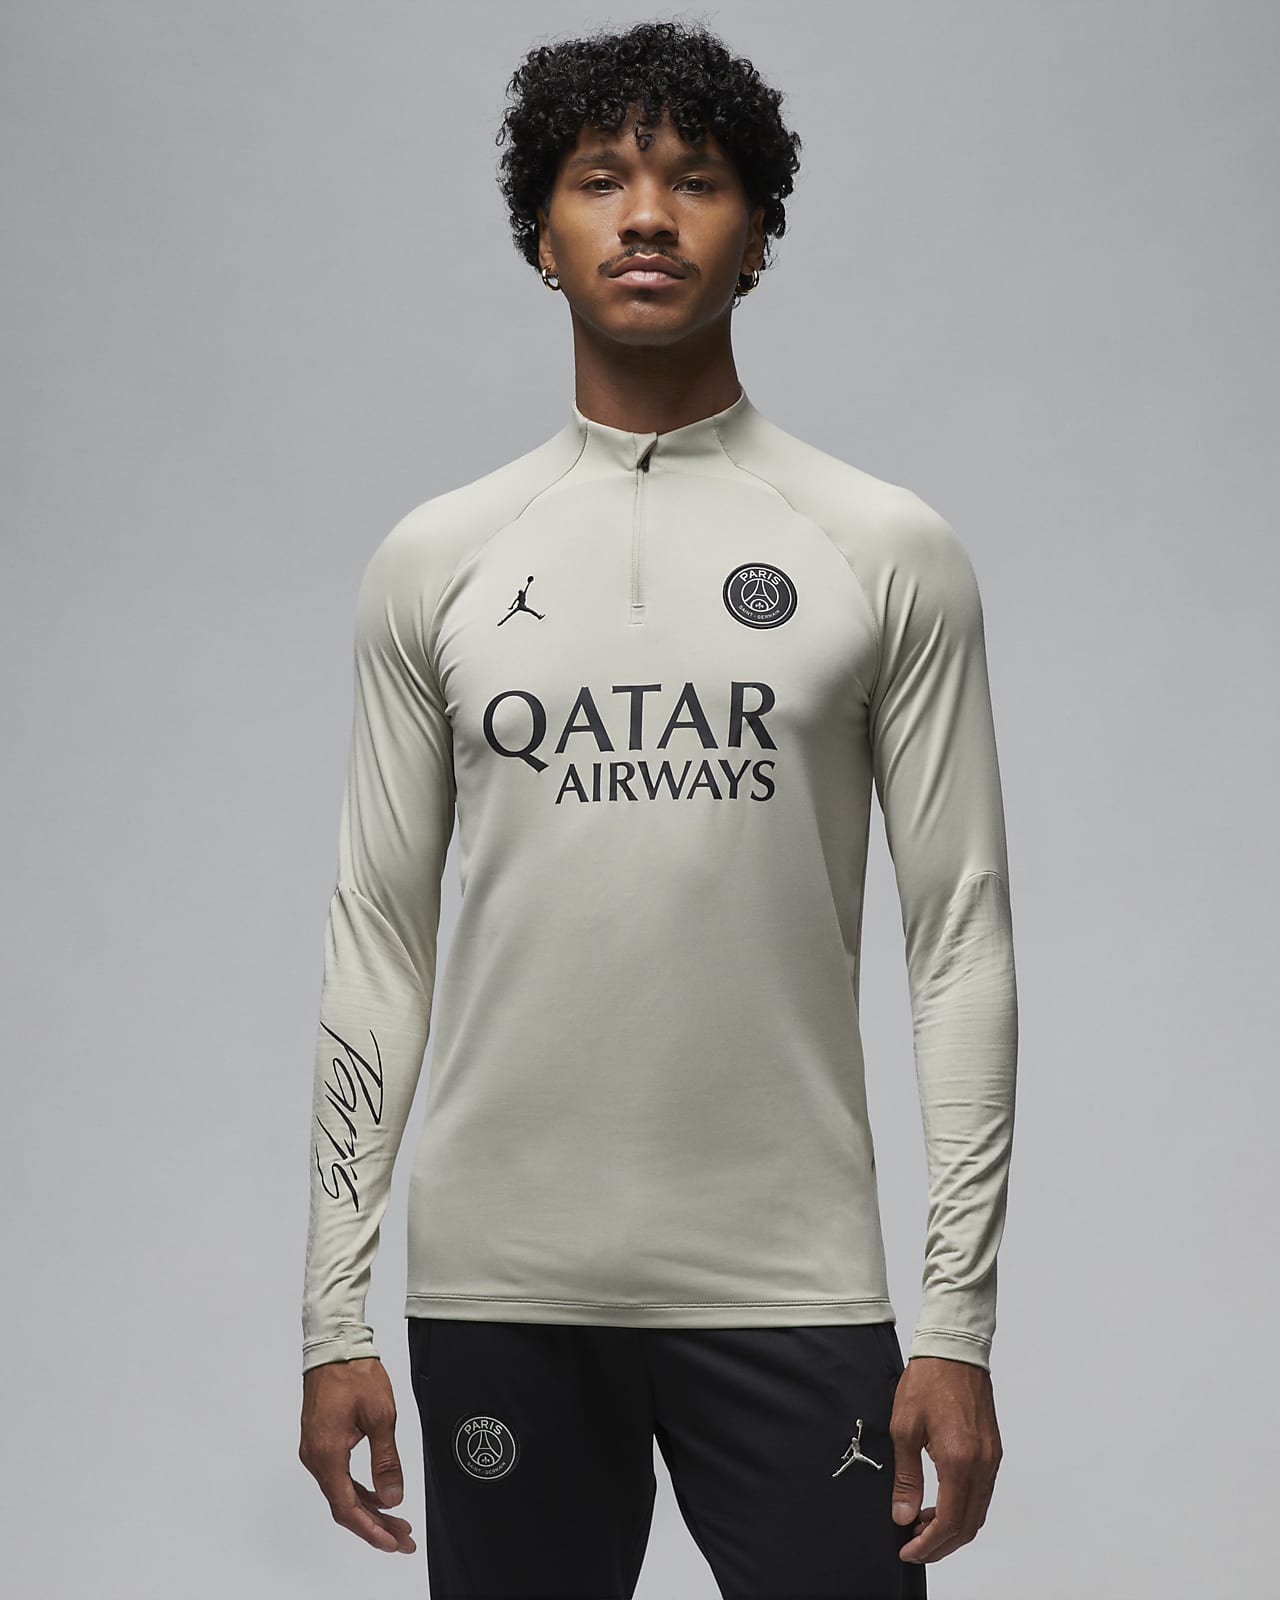 Signed PSG Memorabilia, Paris Saint Germain Signed Shirts, Balls